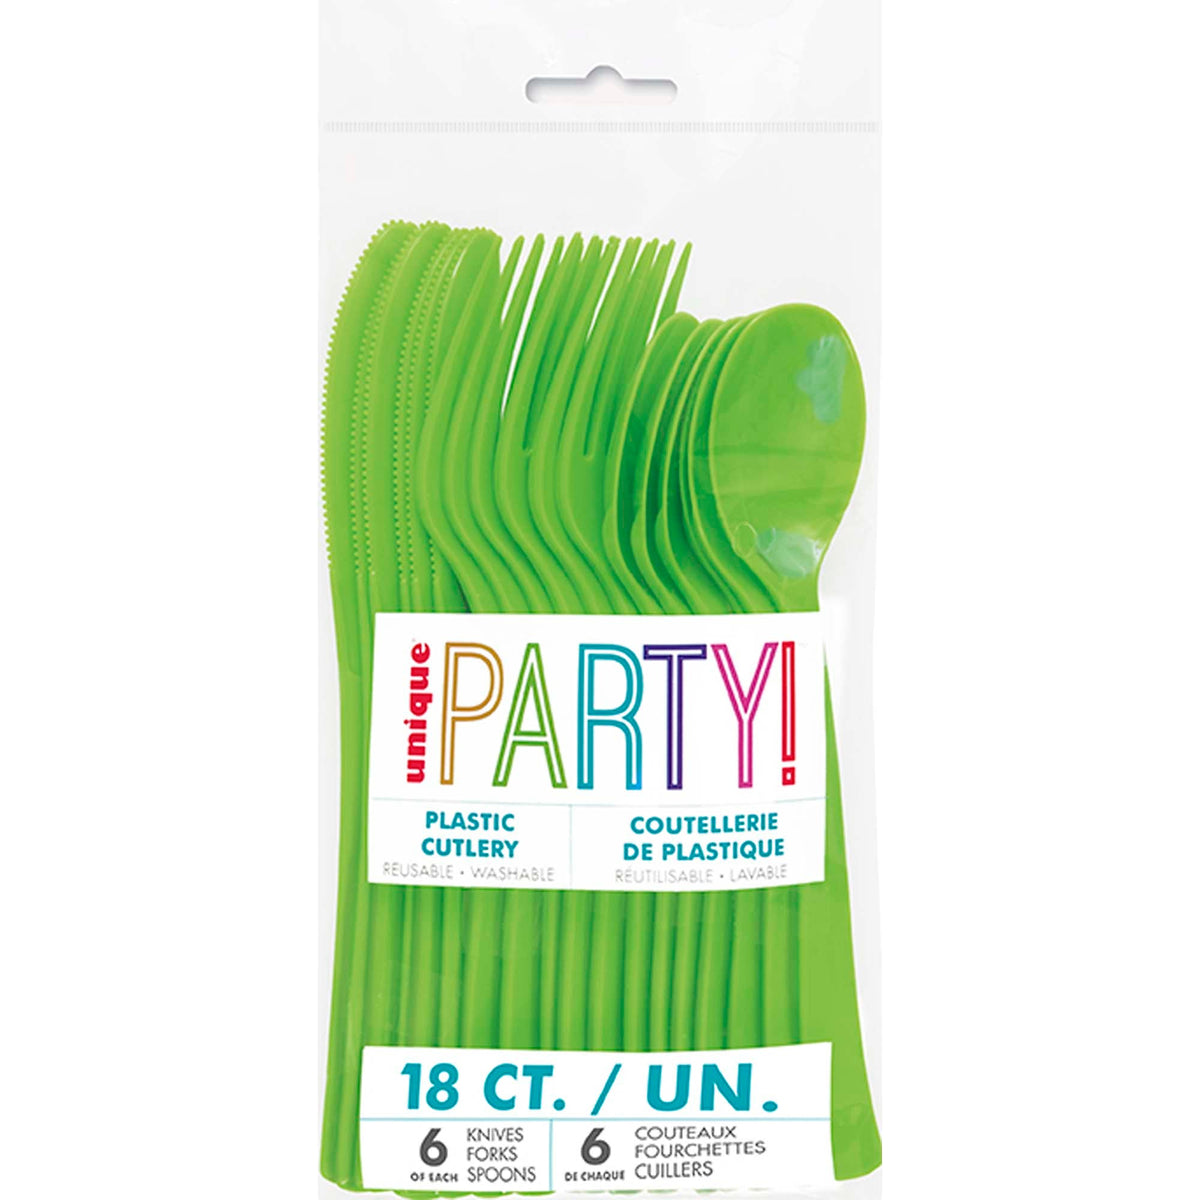 UNIQUE PARTY FAVORS Disposable-Plasticware Lime Green Plastic Cutlery Set, 18 Count 011179394883